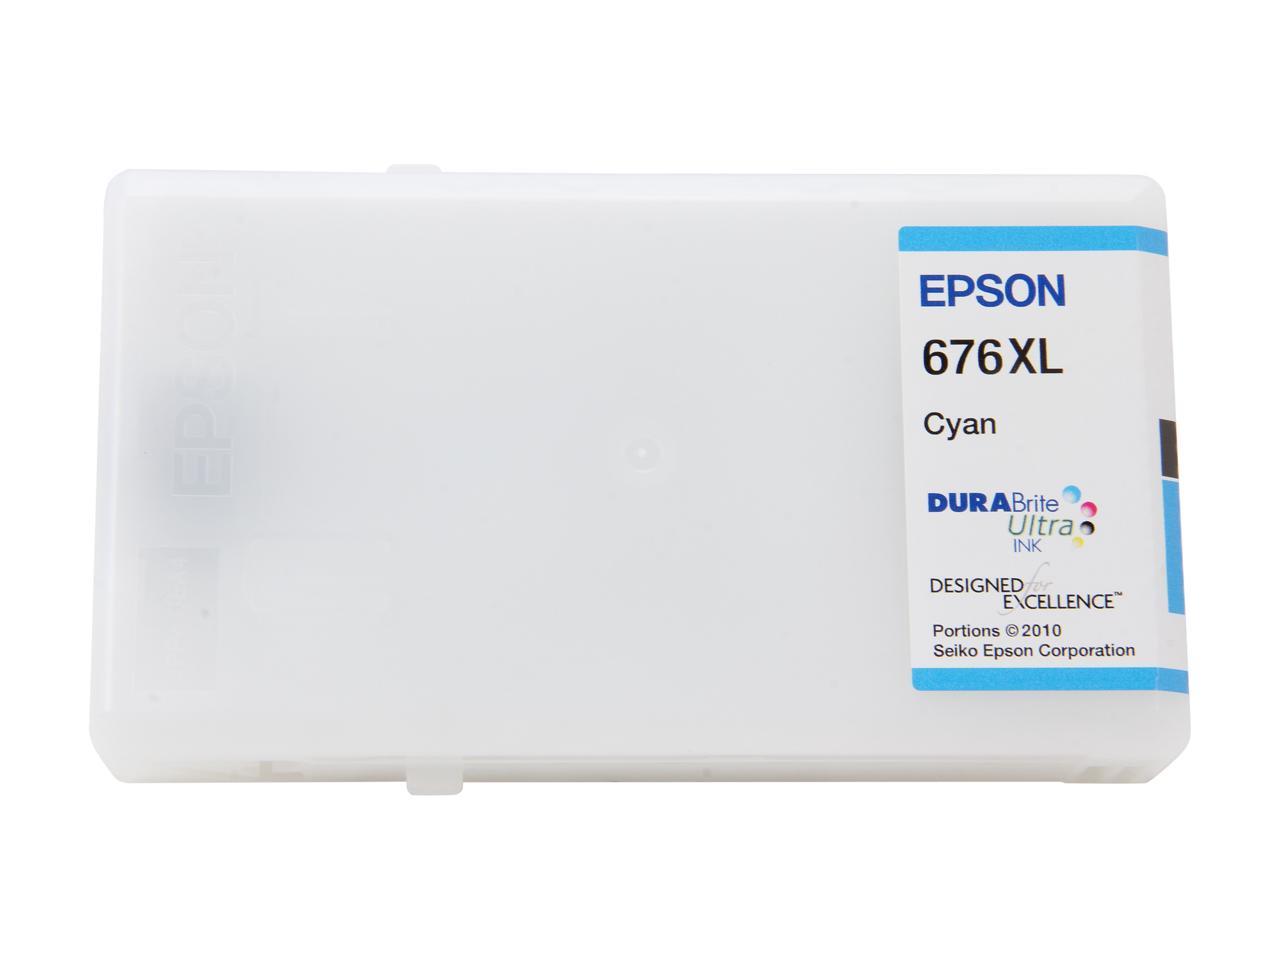 EPSON 676XL Ink Cartridge Cyan